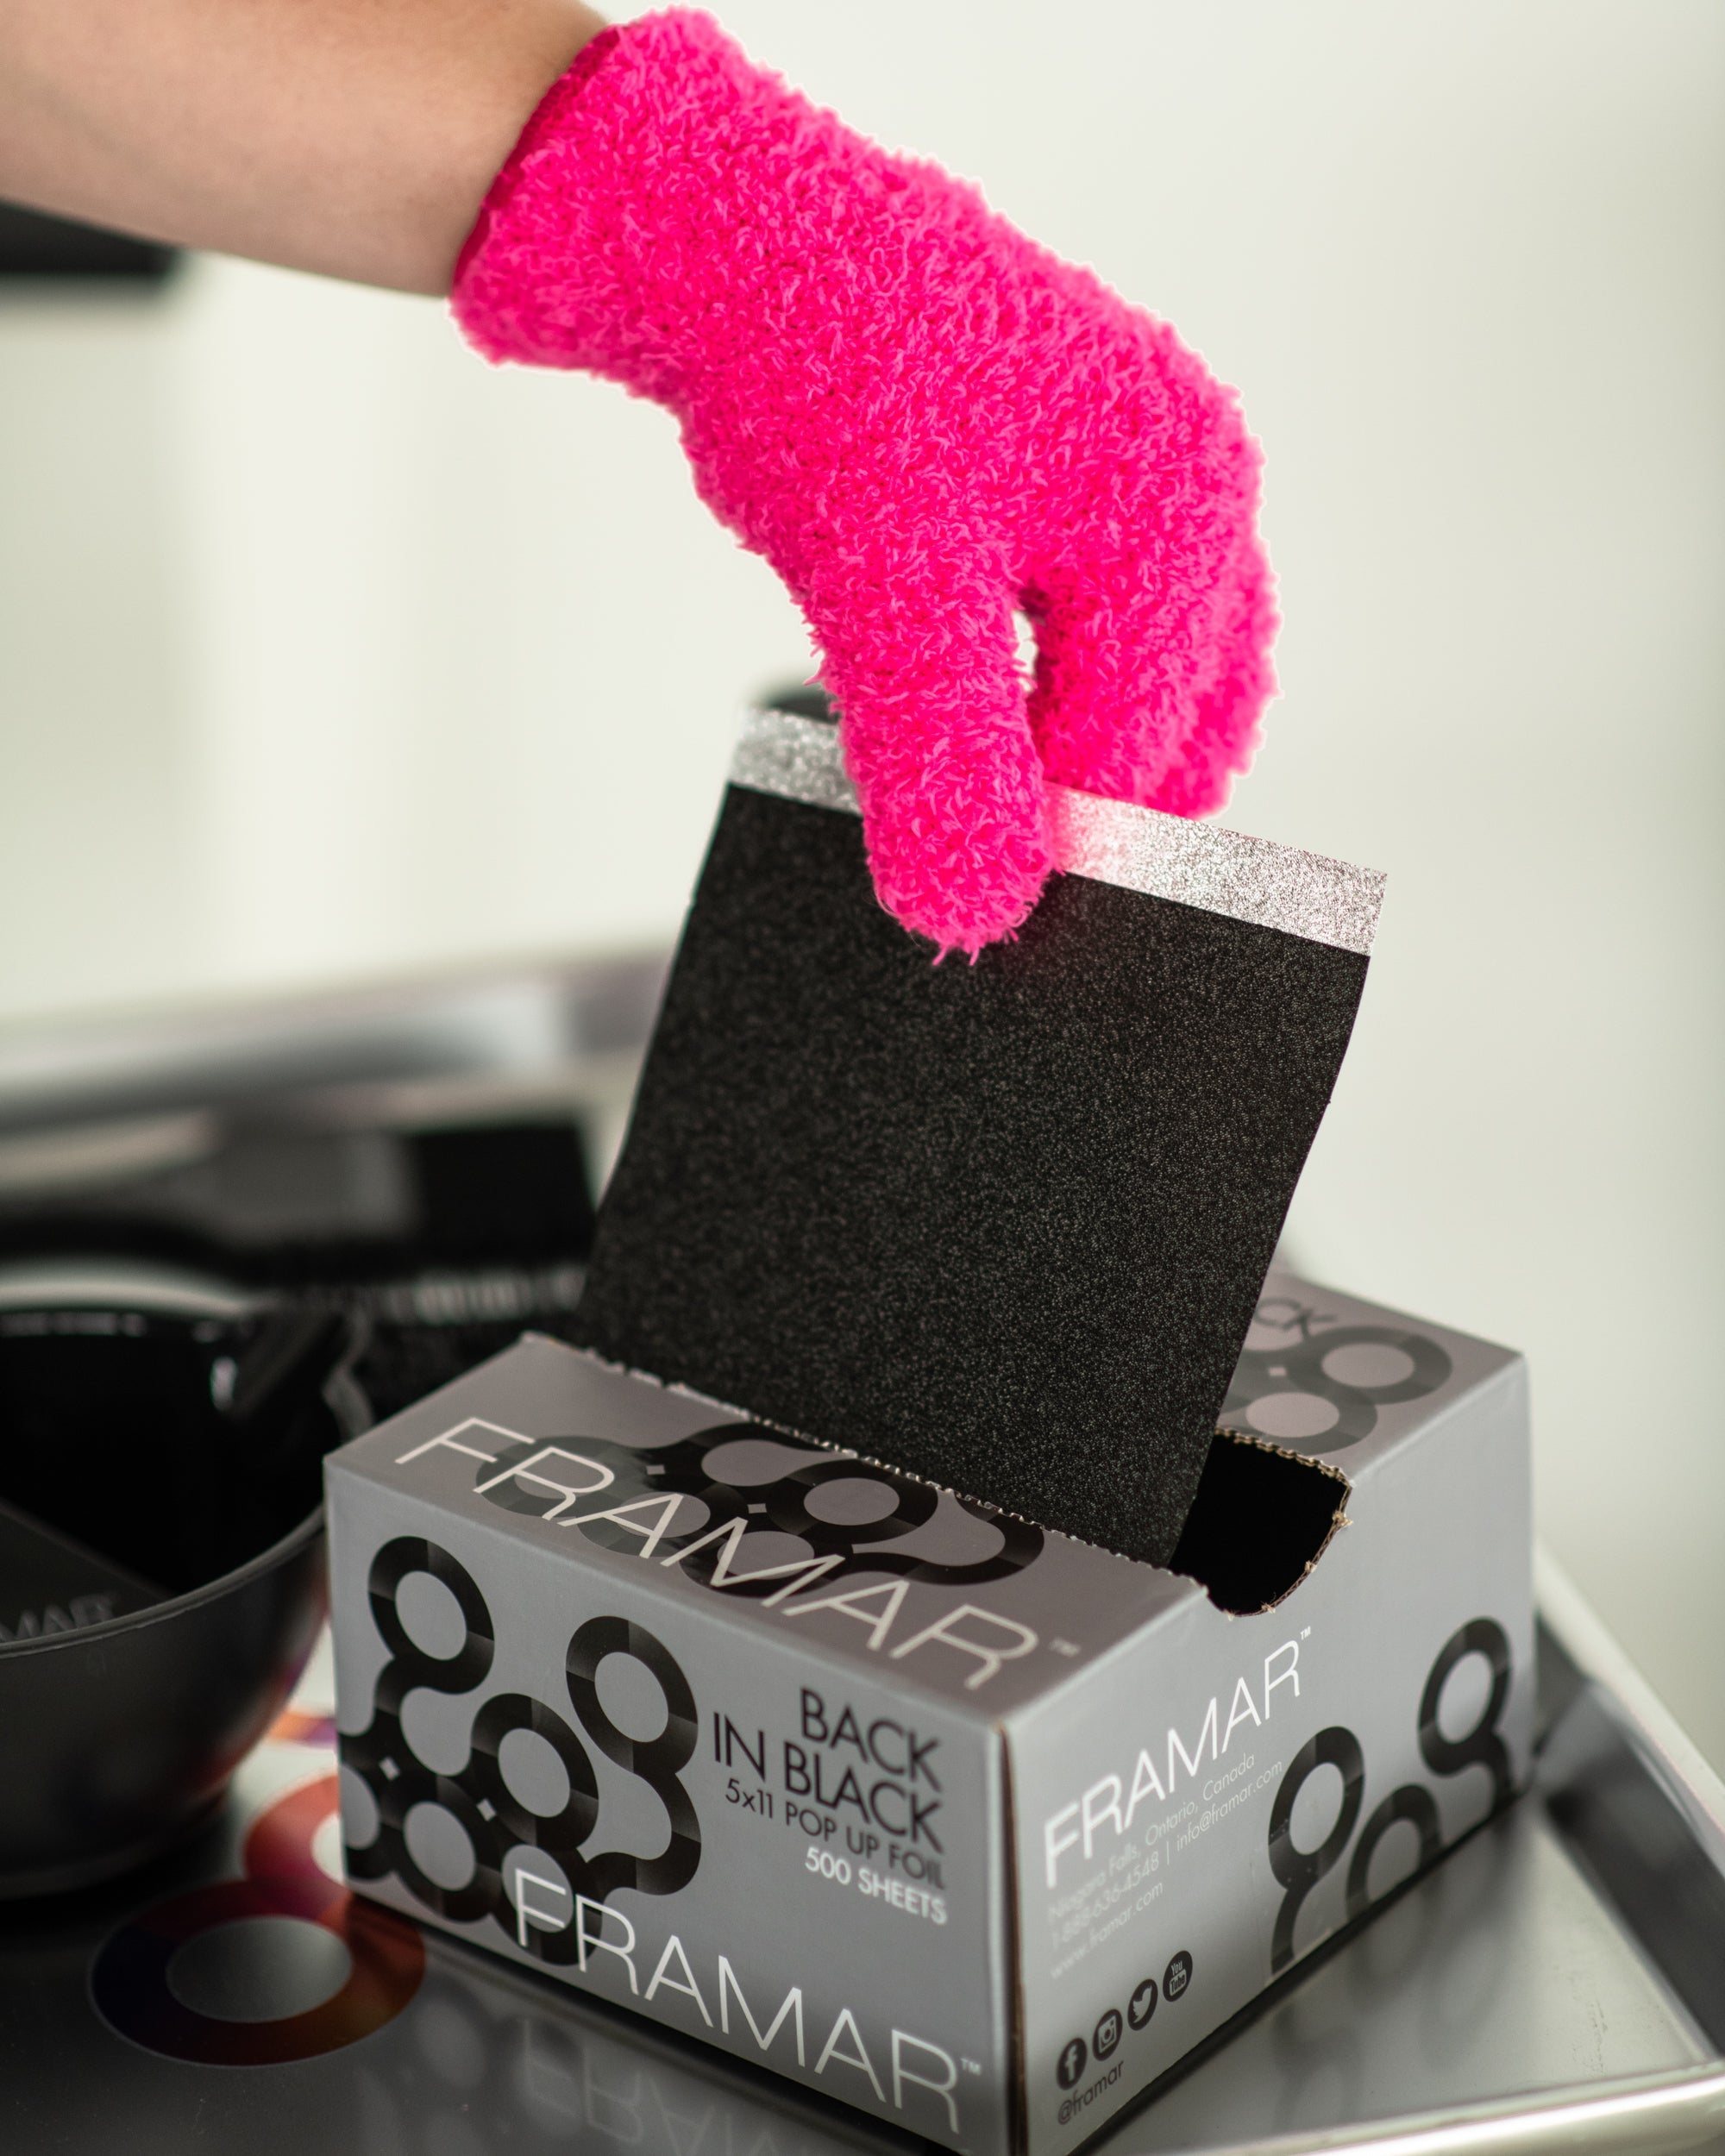 Framar Gloves - Bleach Blenders - Creata Beauty - Professional Beauty Products